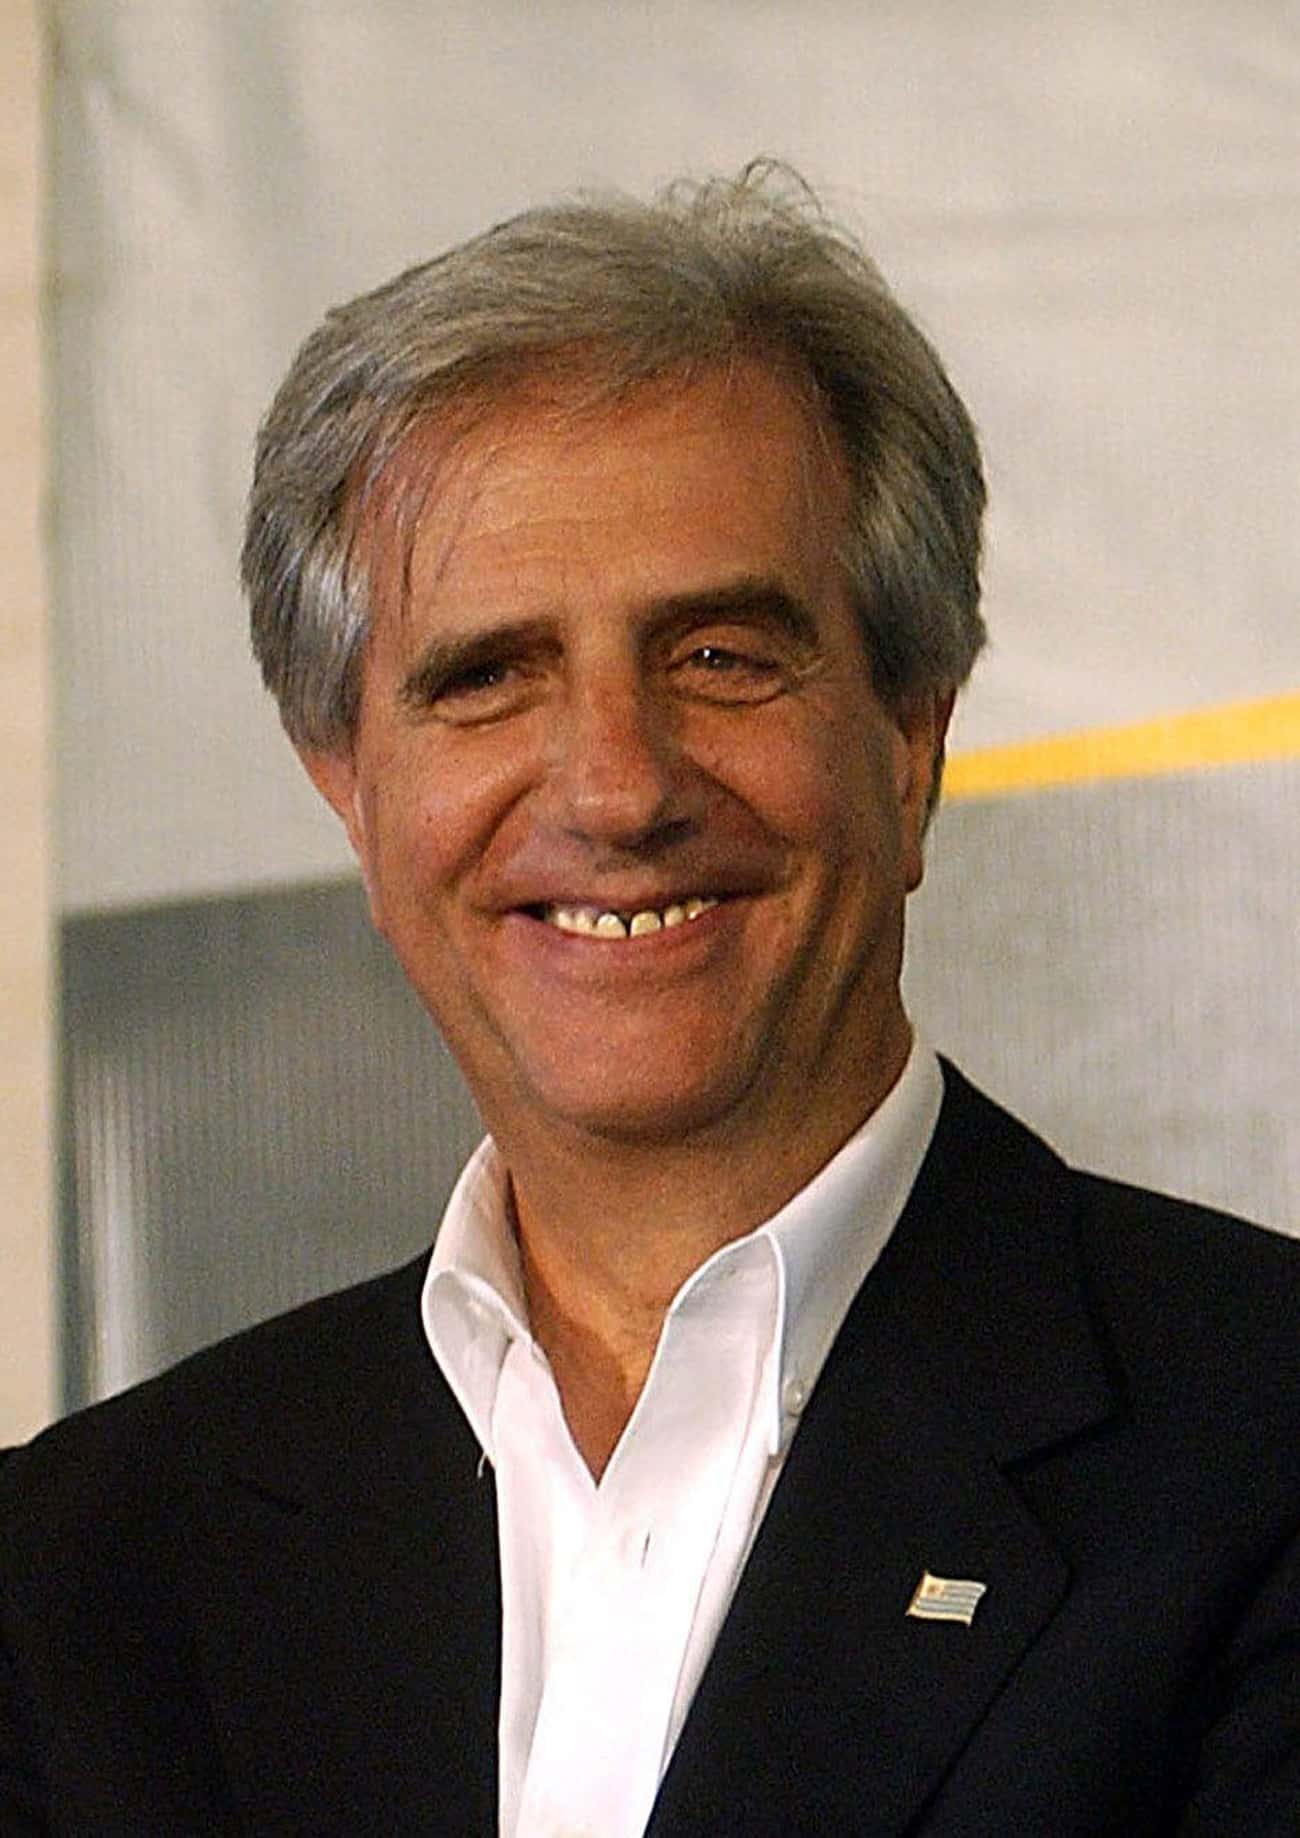 Oncologist - Tabaré Vázquez, President Of Uruguay